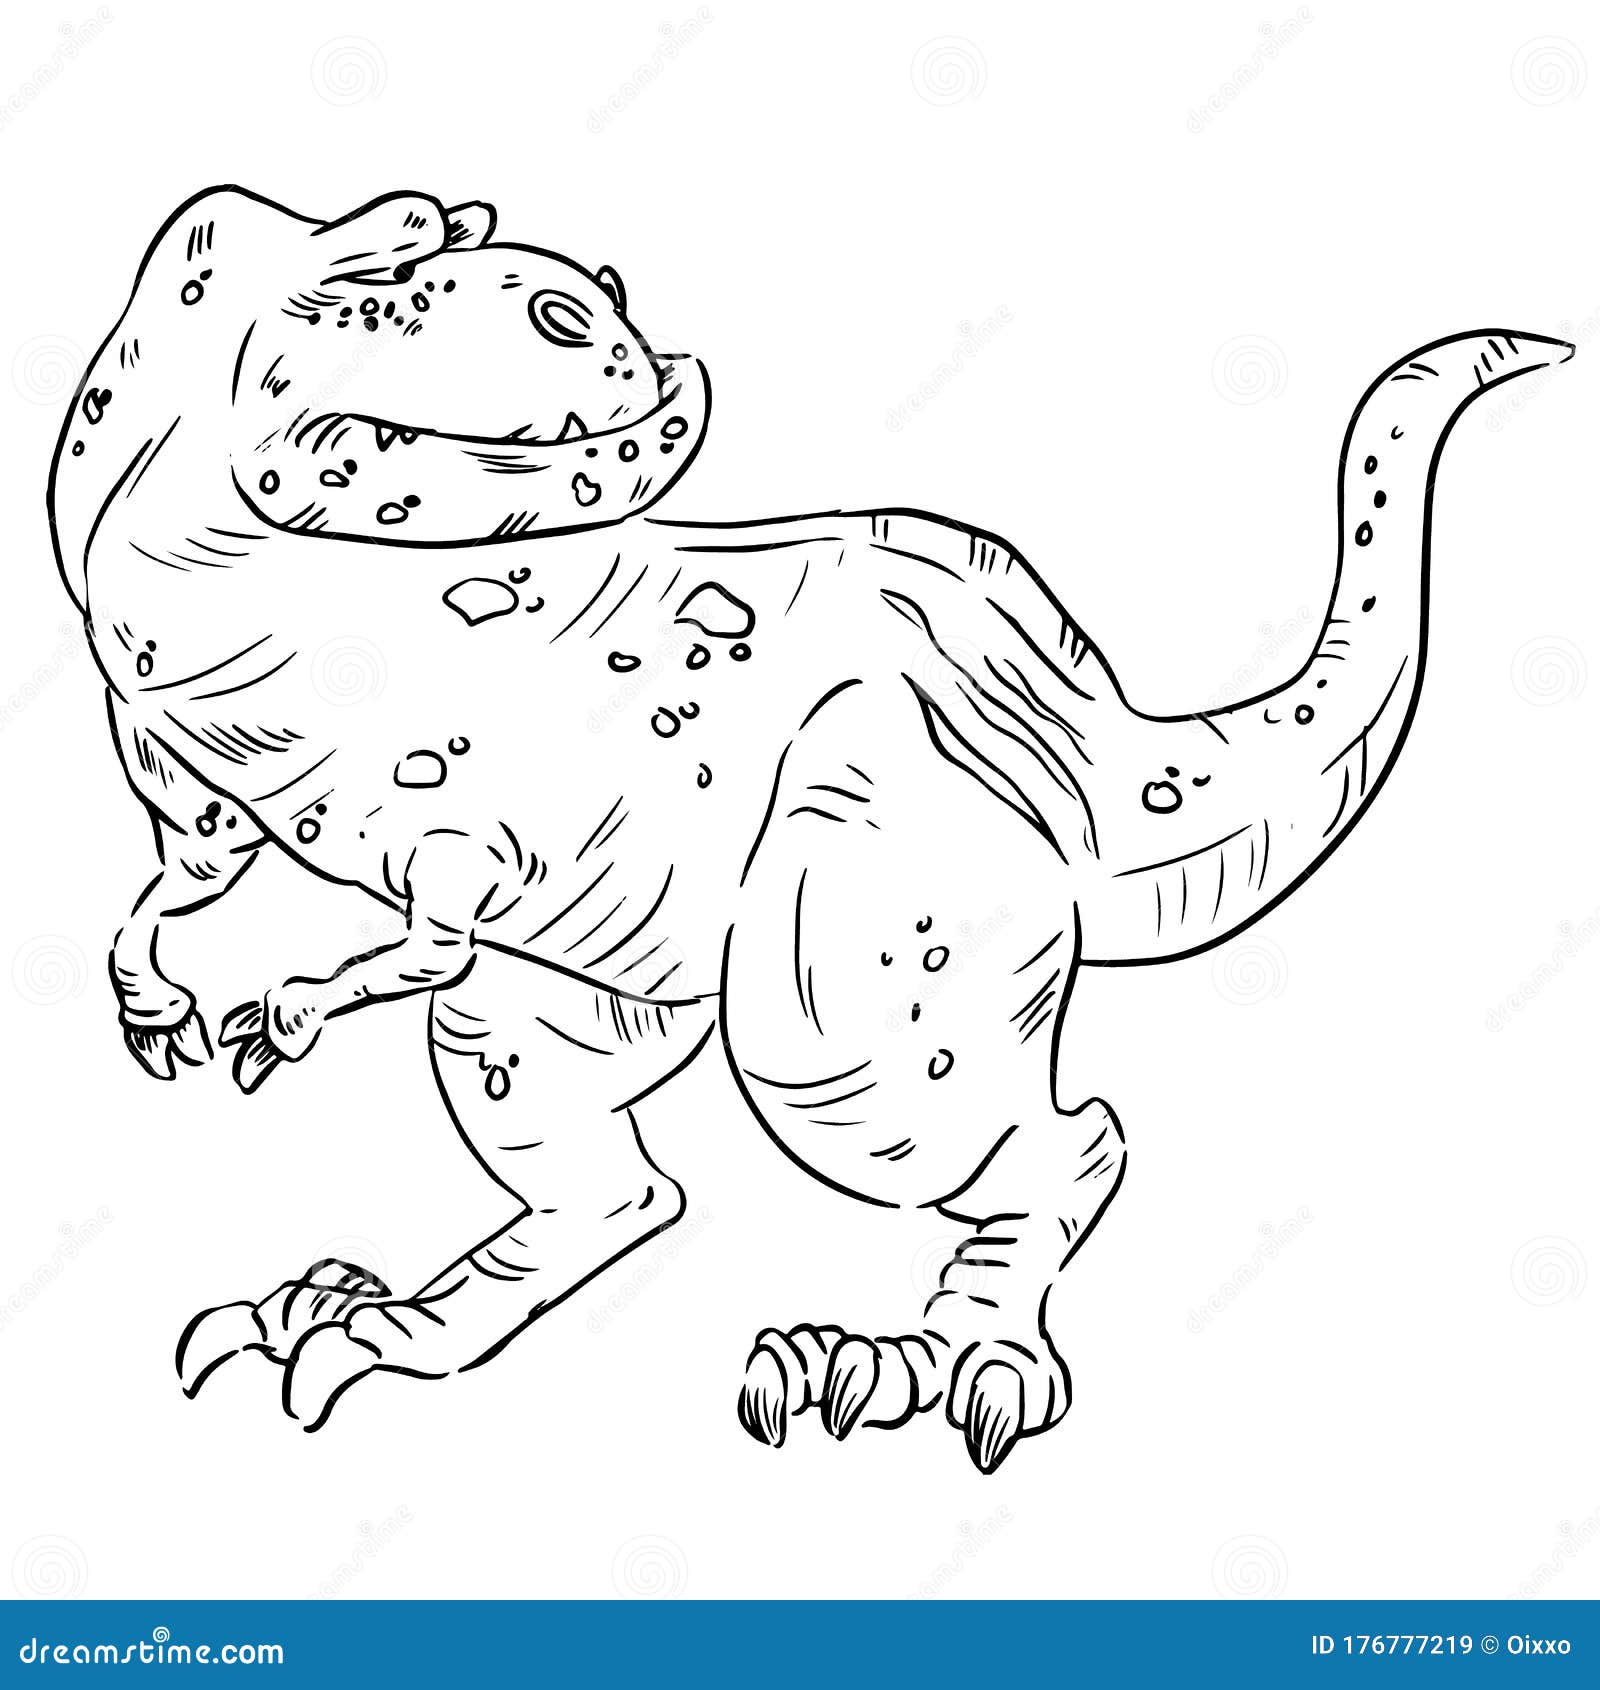 Cartoon Dinosaur Image. Sketch Image Of An Old Cute Comic Style T-Rex  Dinosaur. Tyrannosaurus Rex Dino Hand Drawn Illustrration Stock Vector -  Illustration Of Character, Predator: 176777219